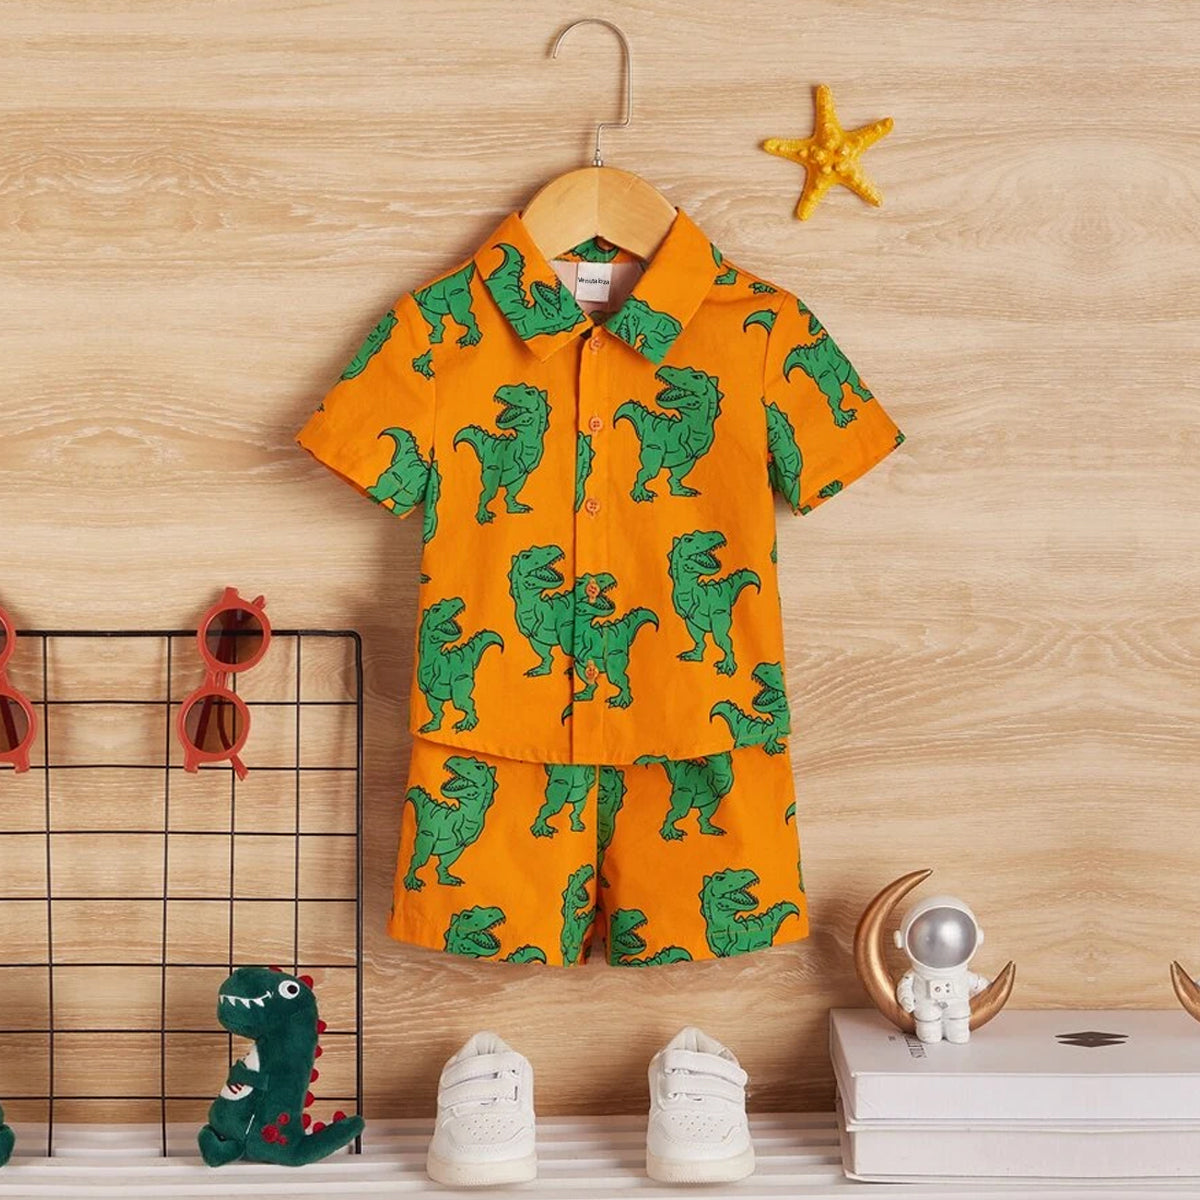 Venutaloza Stylish Baby Two Piece Set Shirt & Short And (Combo Pack Of 3) T-Shirt & Shorts.